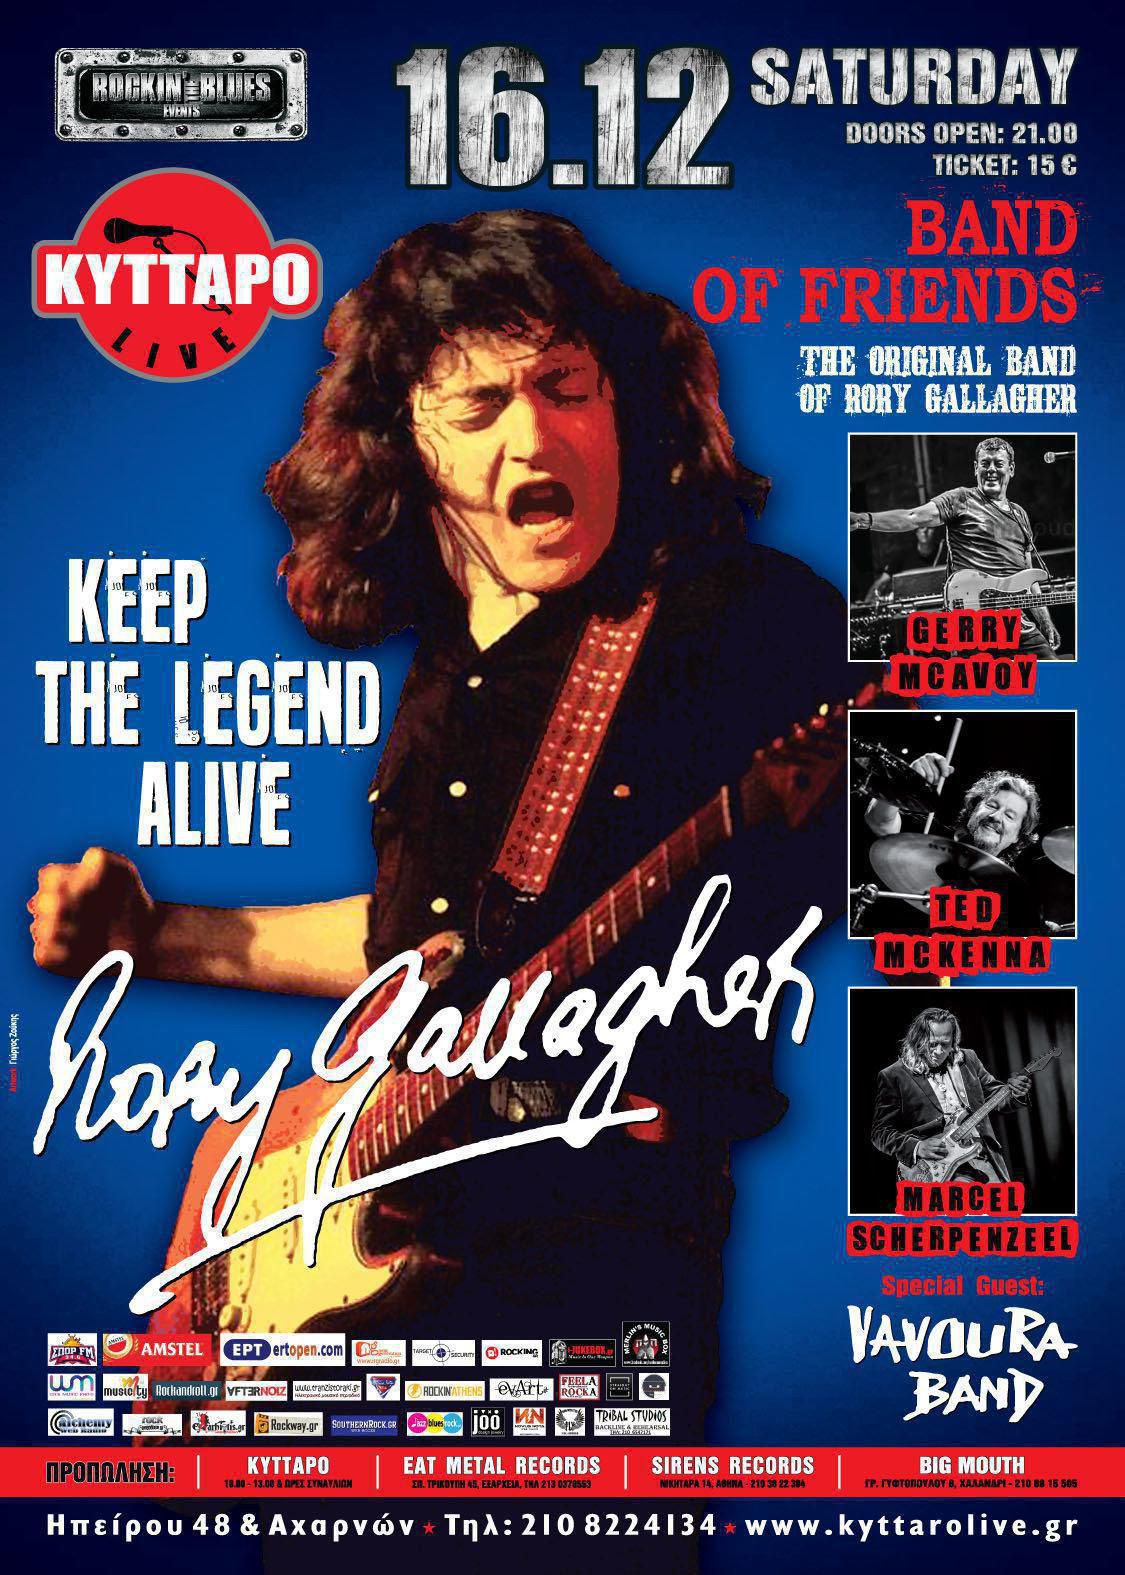 Kyttaro Rory 16 Dec - Poster.jpg